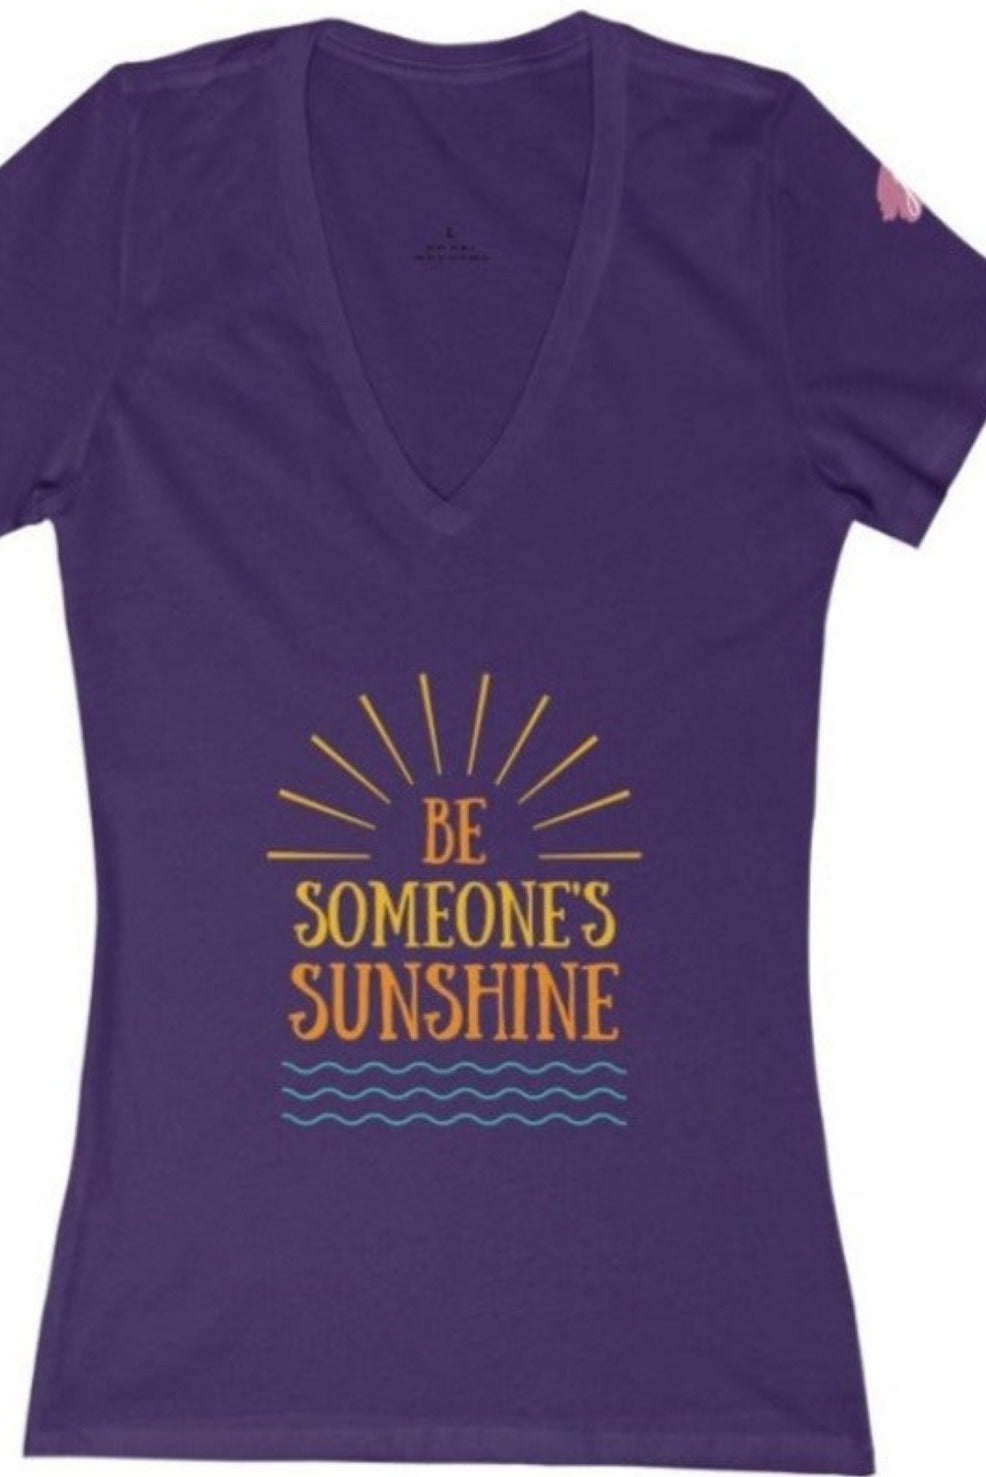 Be Someone's Sunshine Women's Tee Team Purple V-neck JT's Designer Fashion